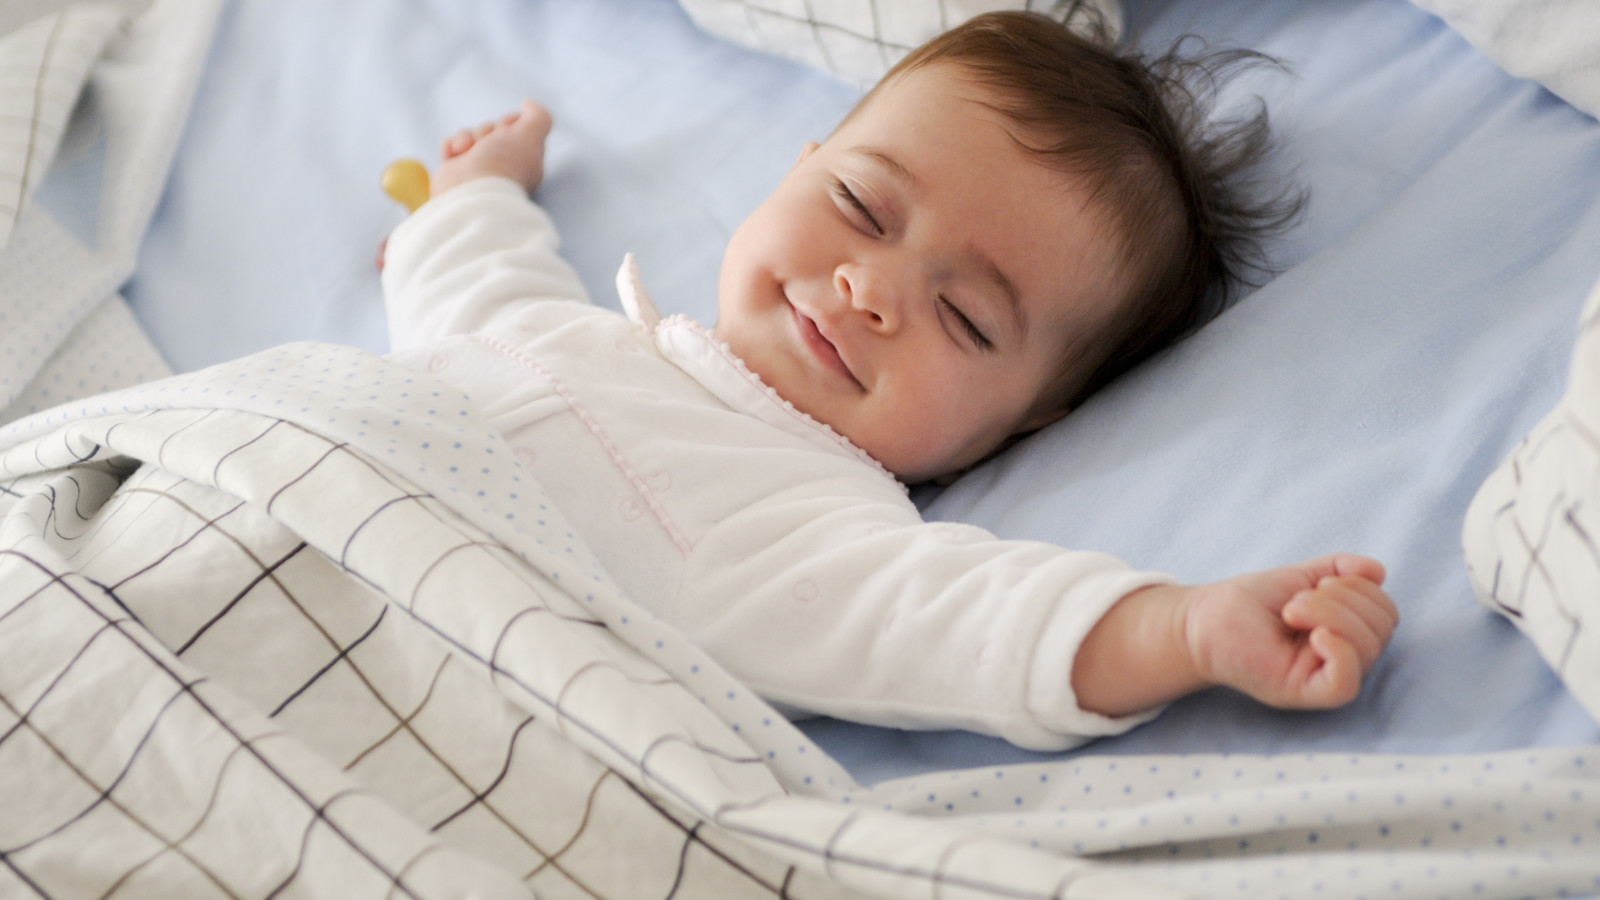 Five Tips to Improve Your Sleep Journey